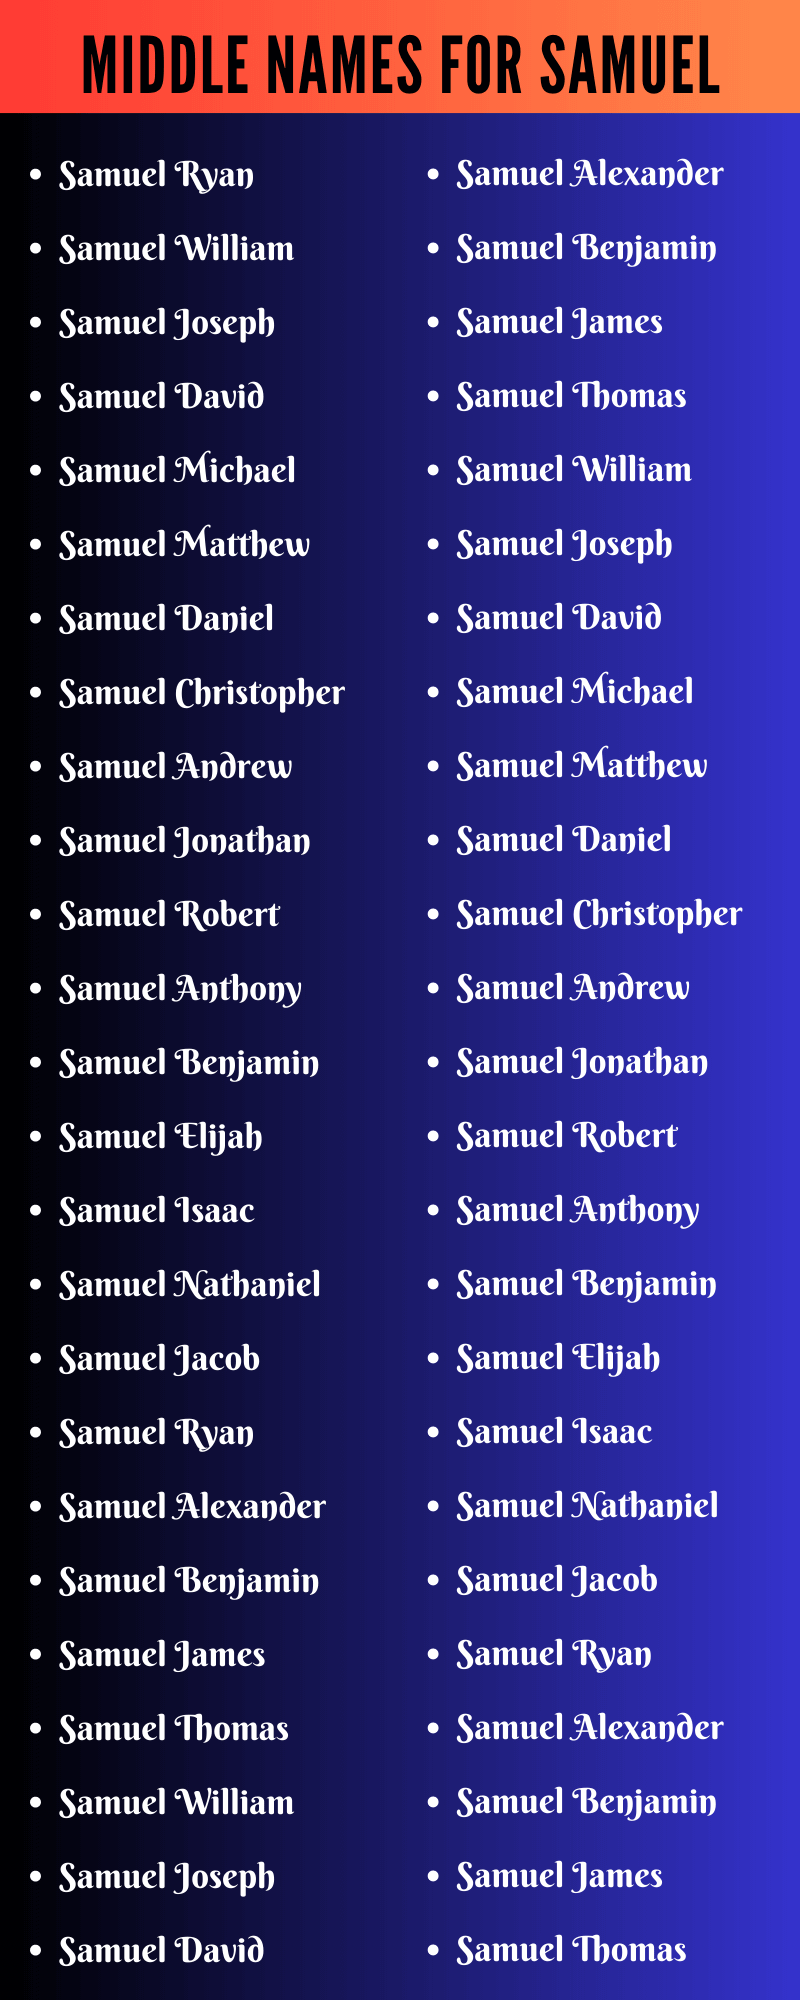 Middle Names For Samuel